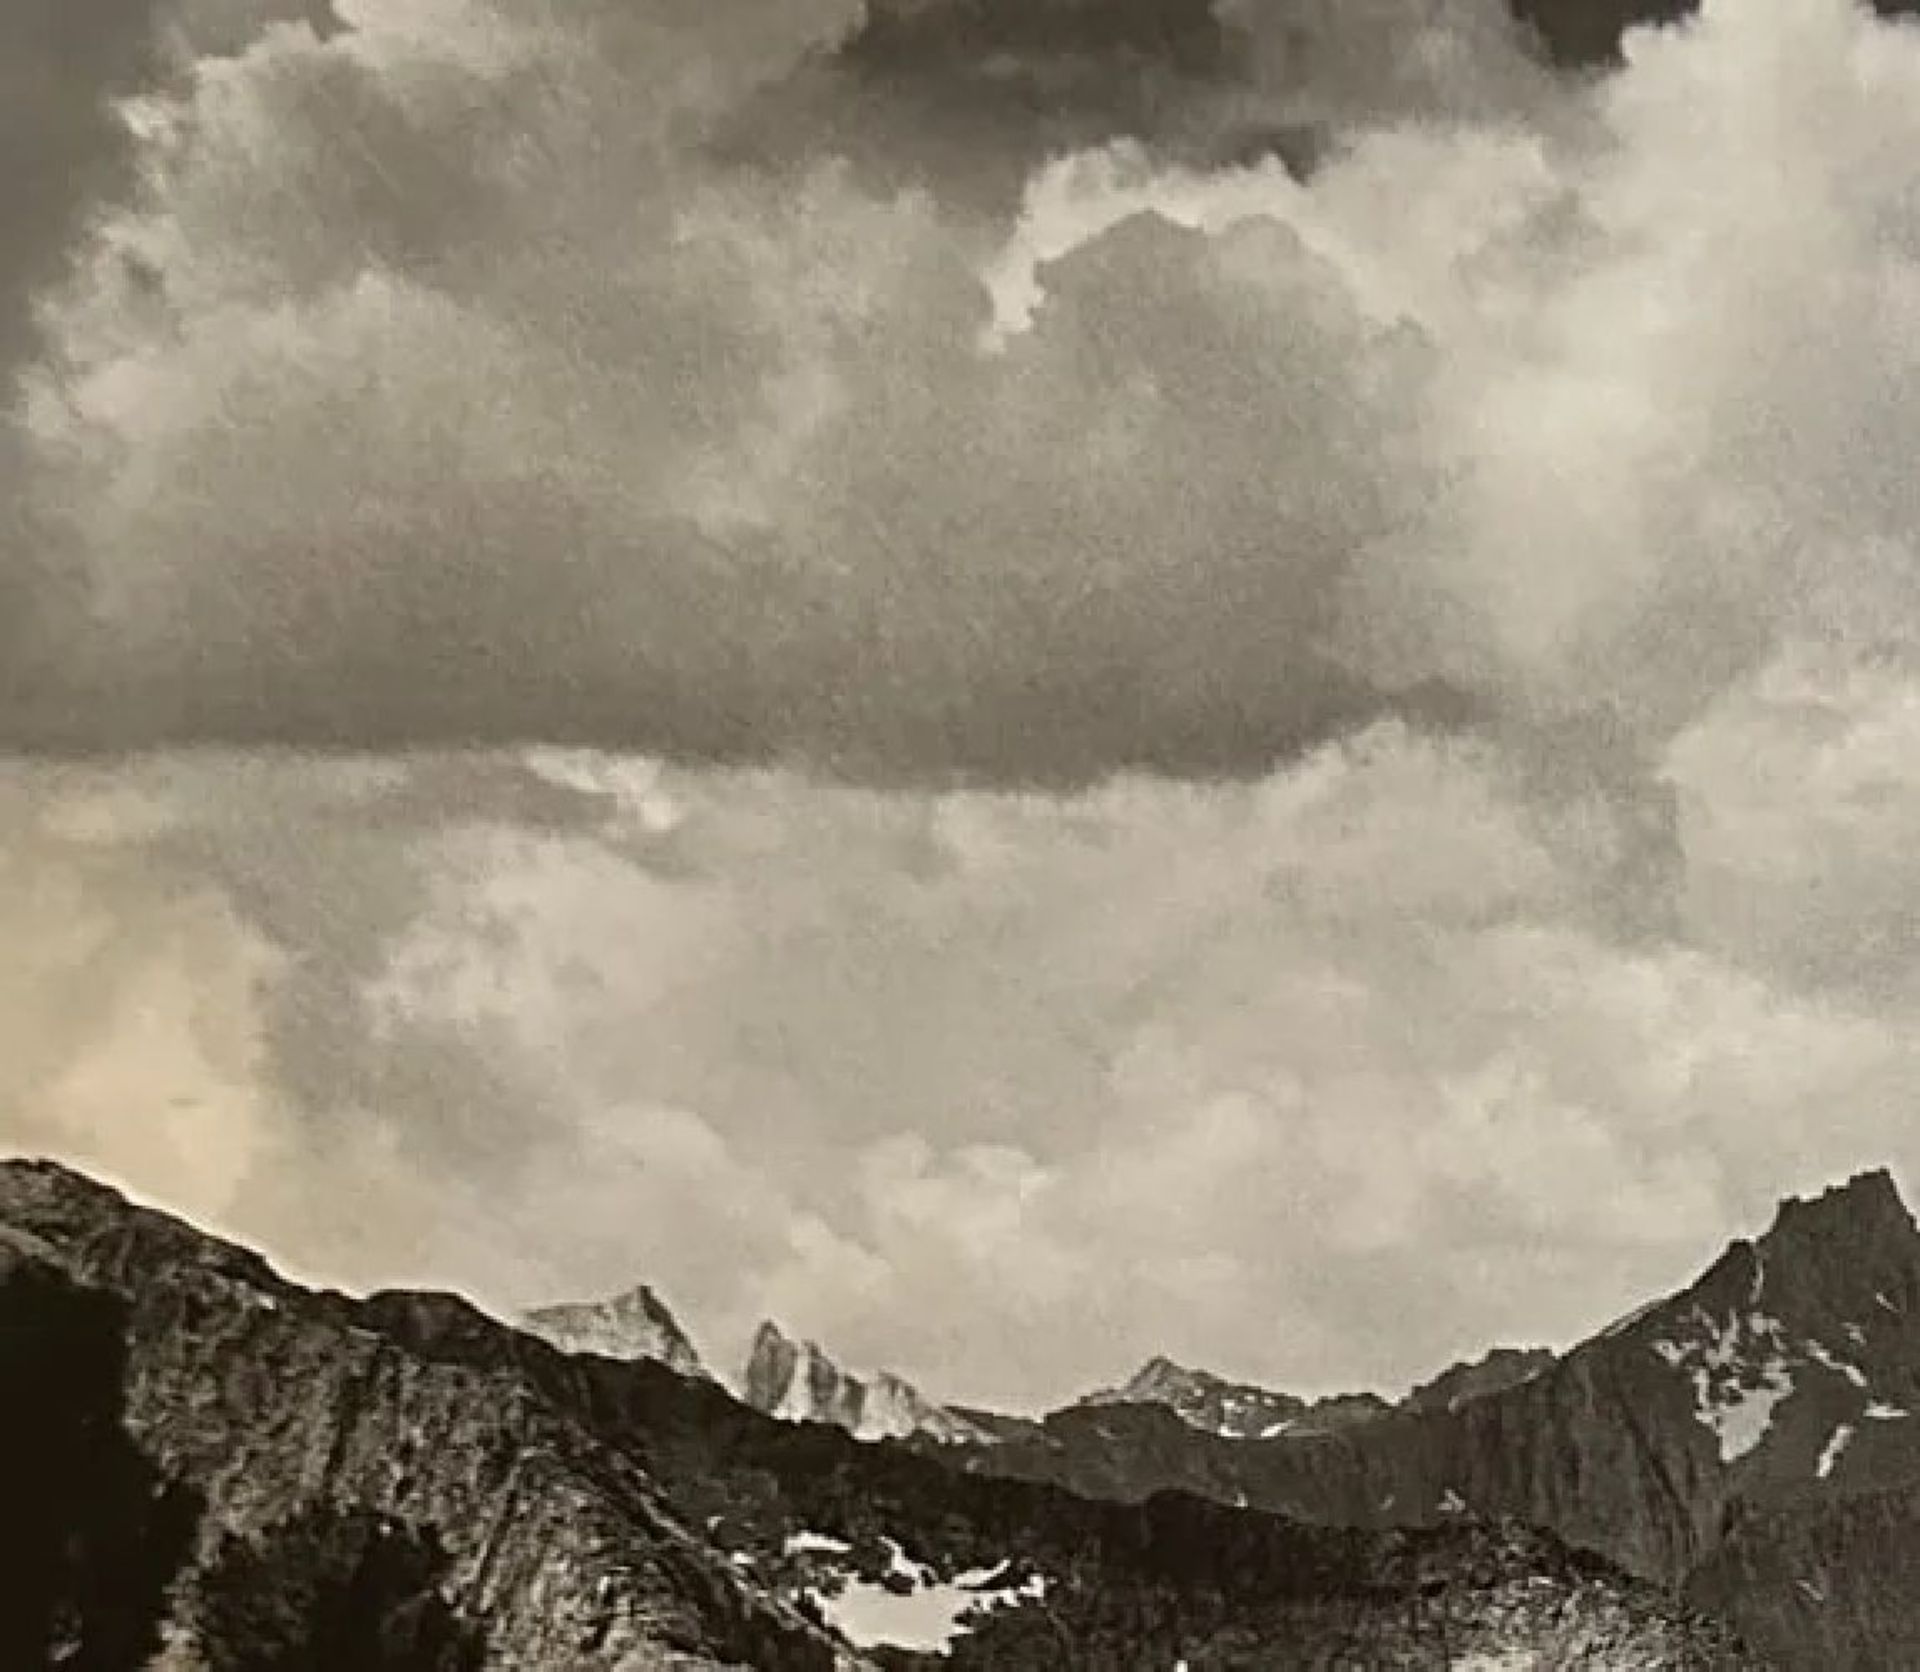 Ansel Adams "Mount Clarence King" Print - Image 2 of 6